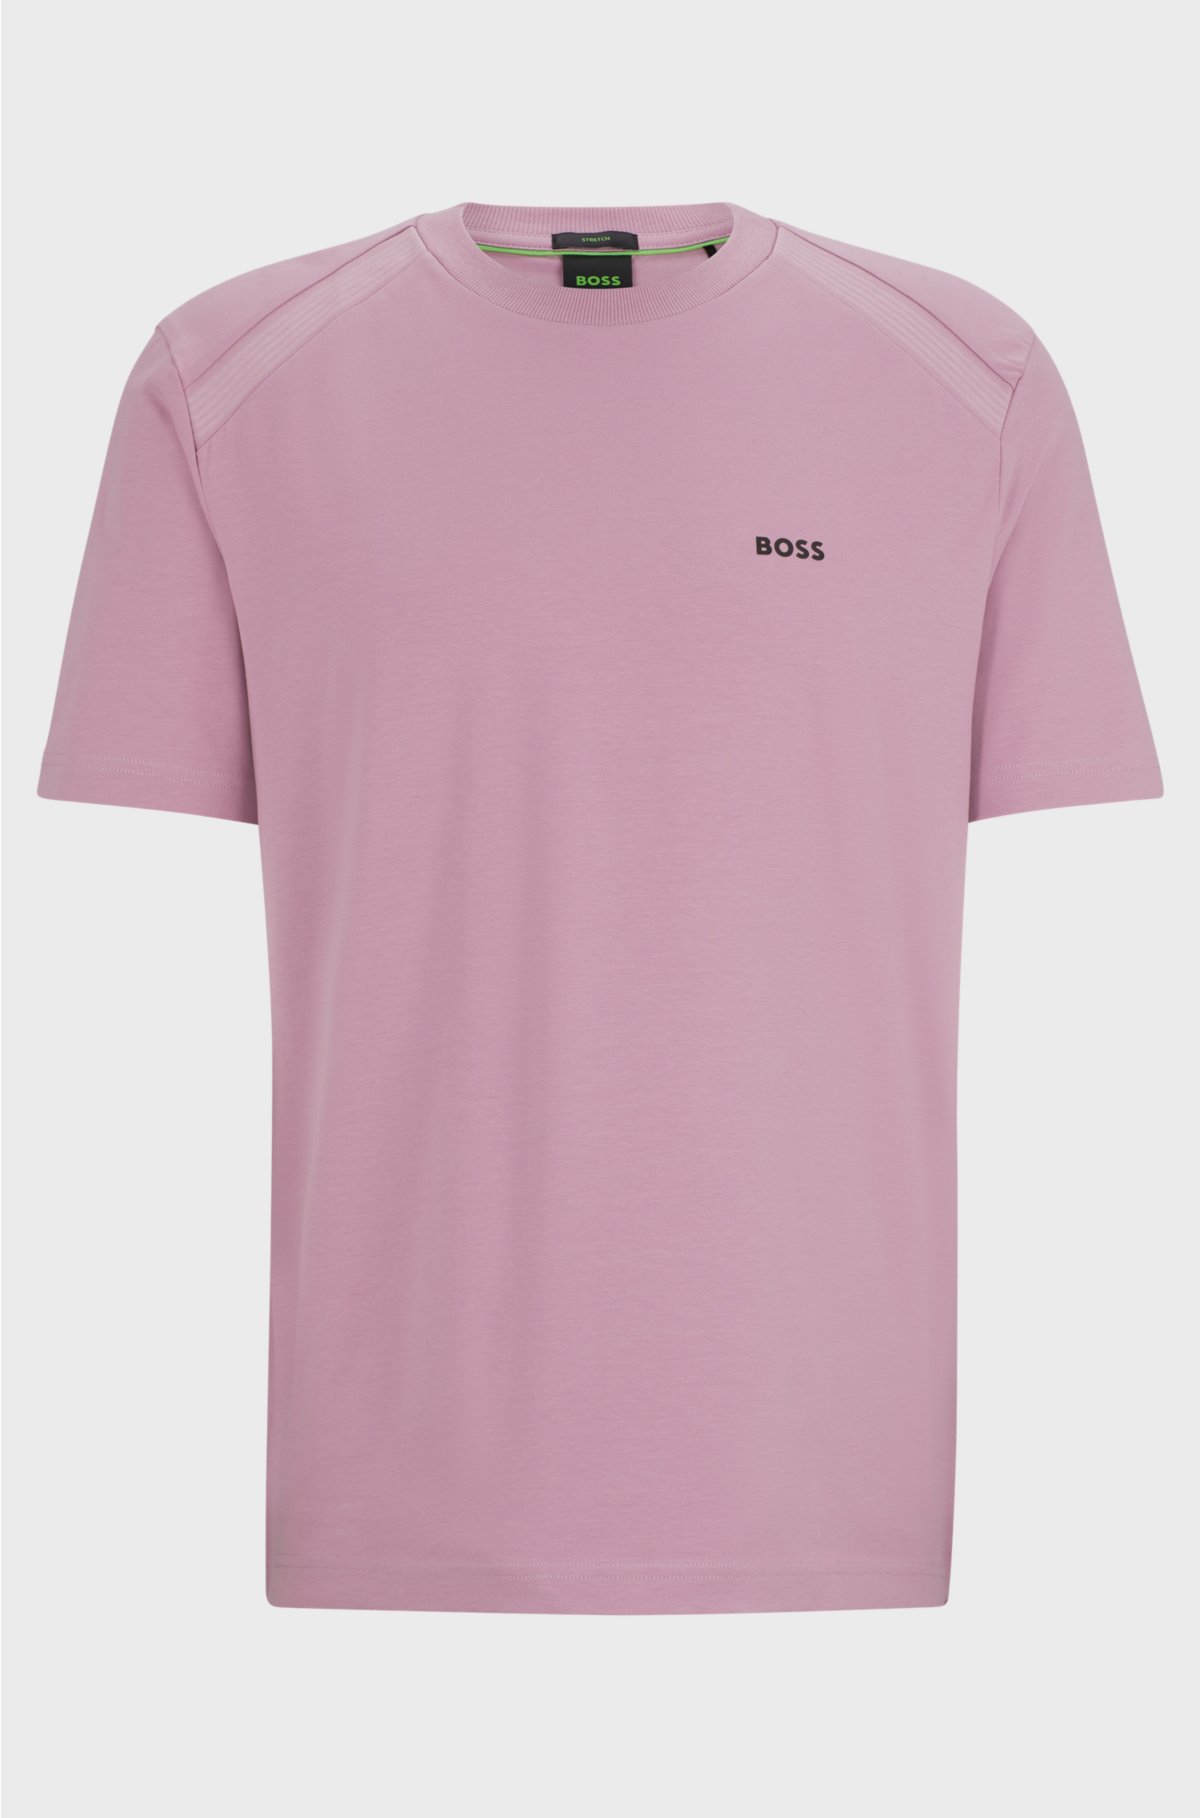 Stretch-cotton T-shirt with crew neckline and logo detail, Light Purple